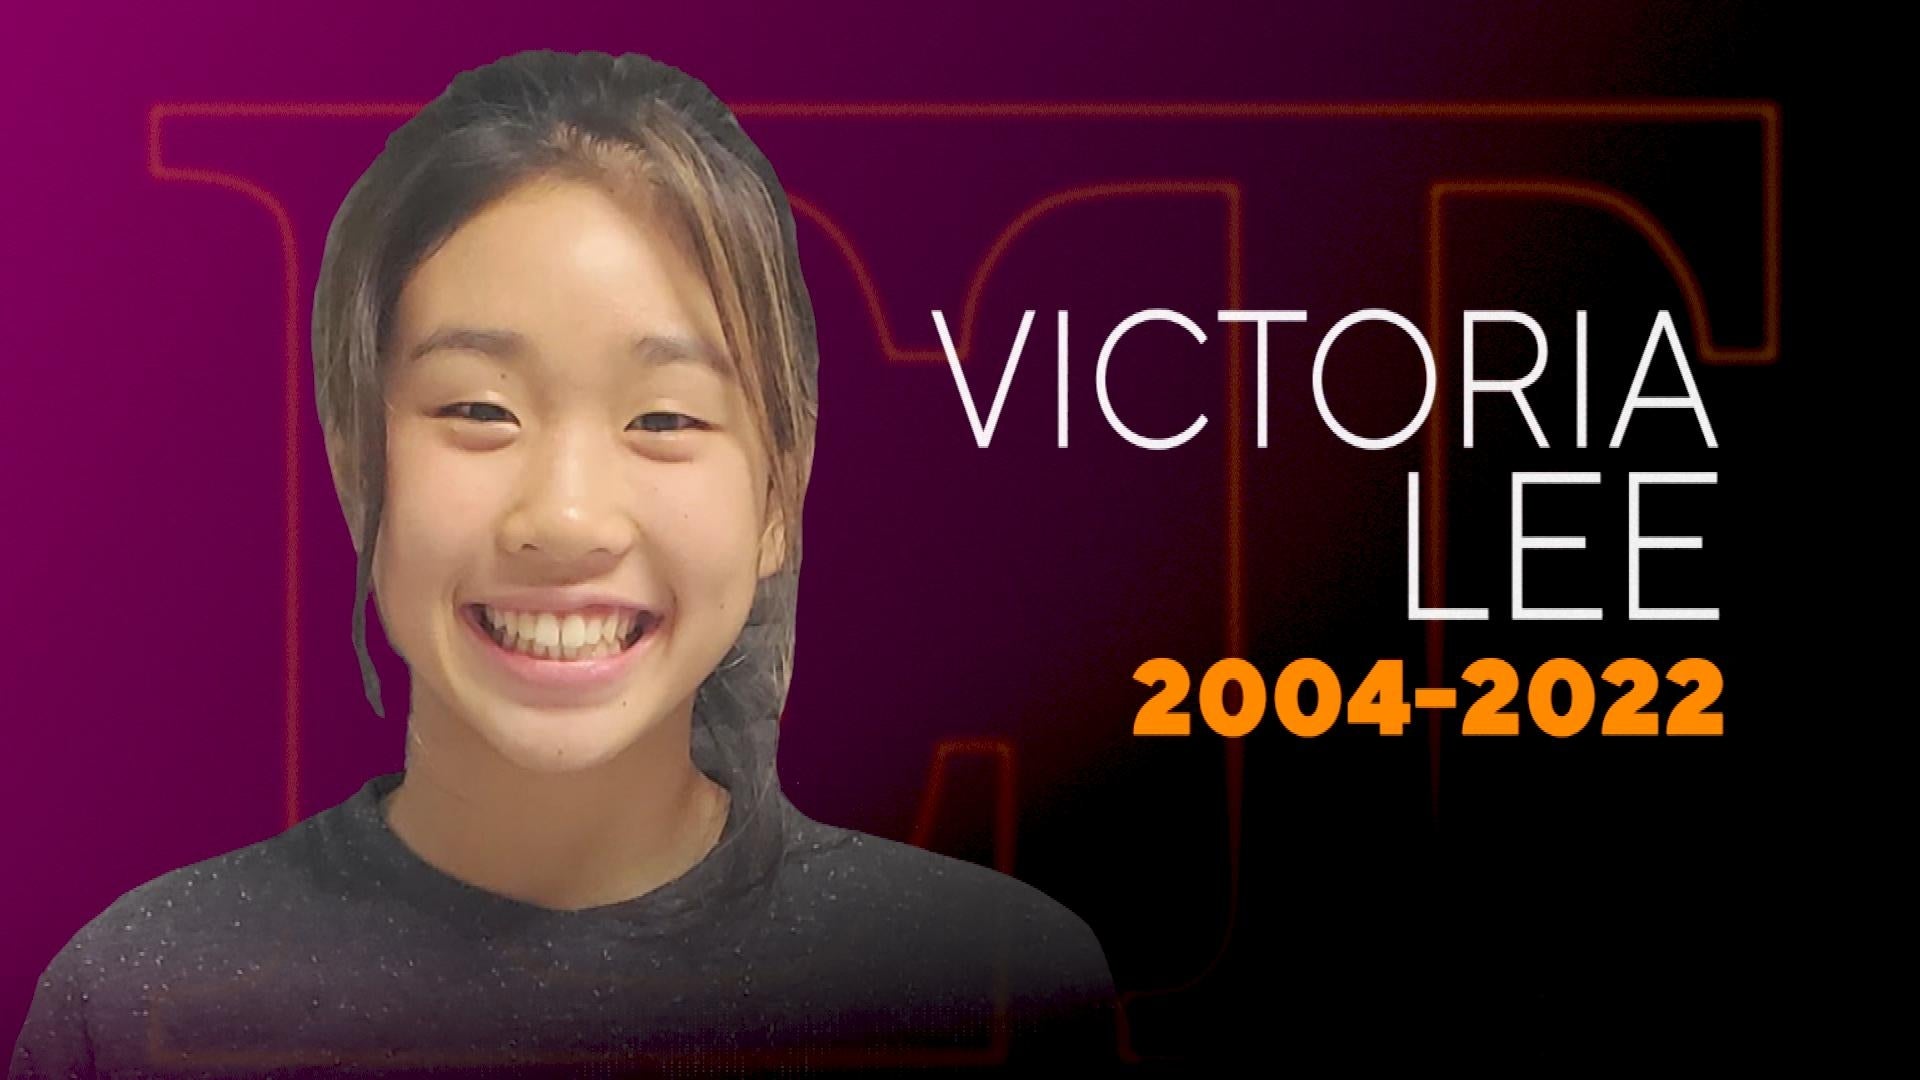 Victoria Lee, Rising MMA Star, Dead at 18